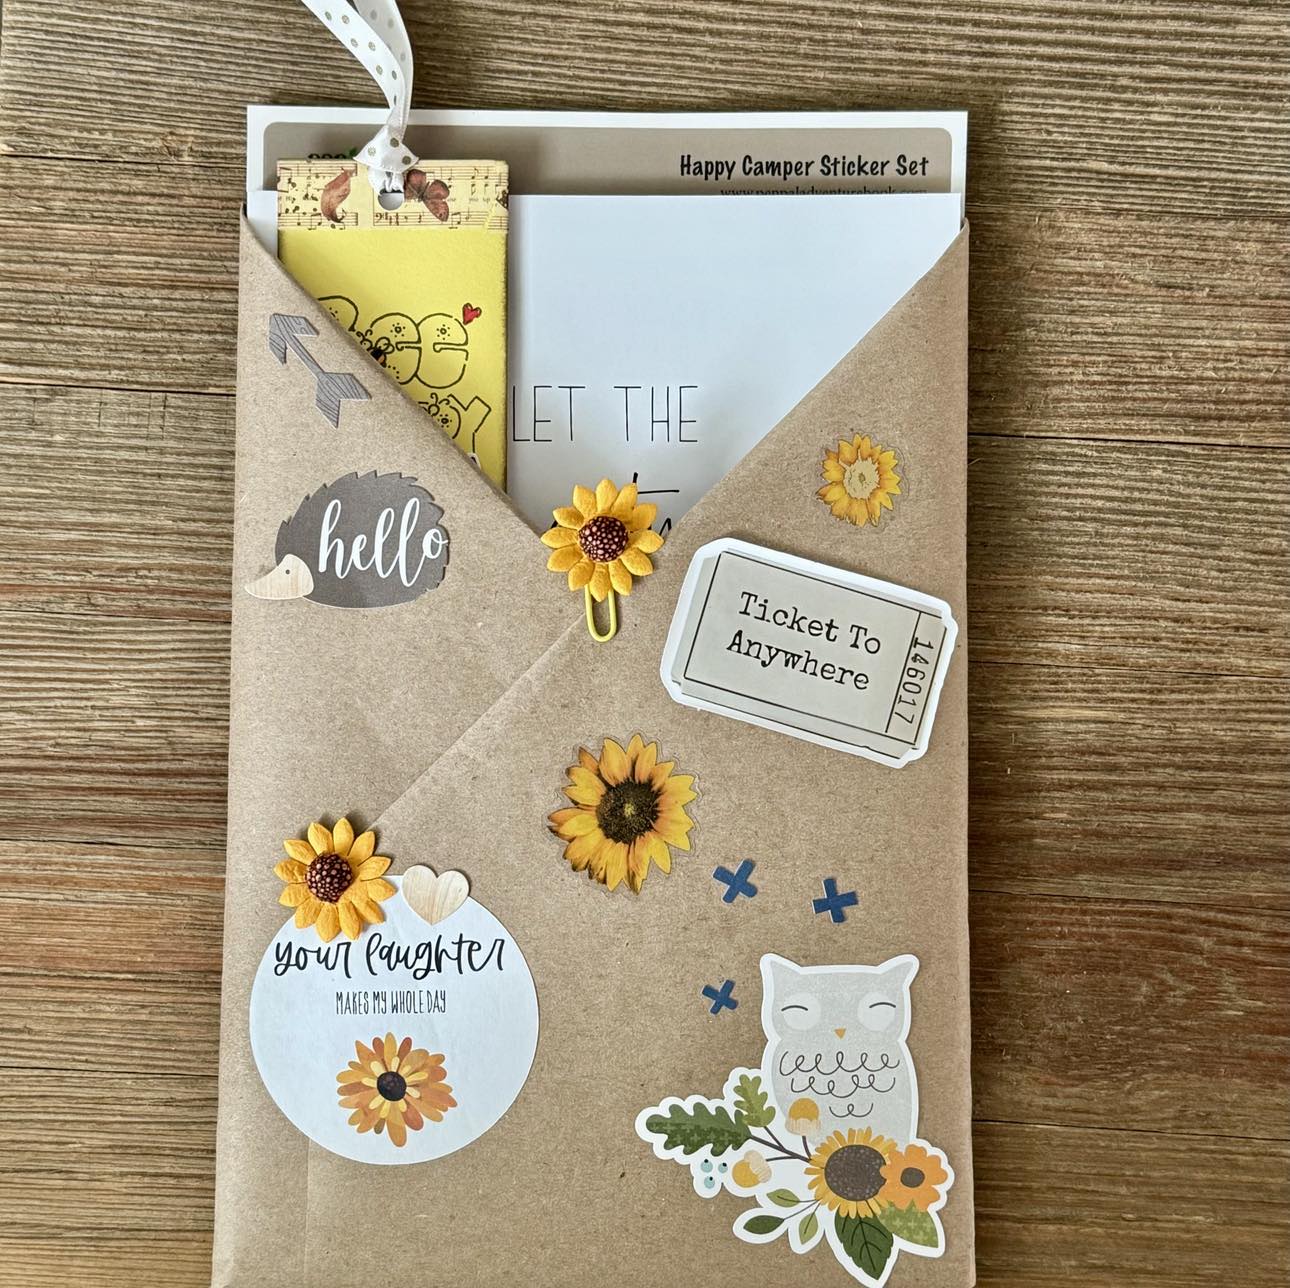 Bee Happy Sunflower - Gift Set with Pen Pal Adventure Journal & Happy Camper Sticker Set